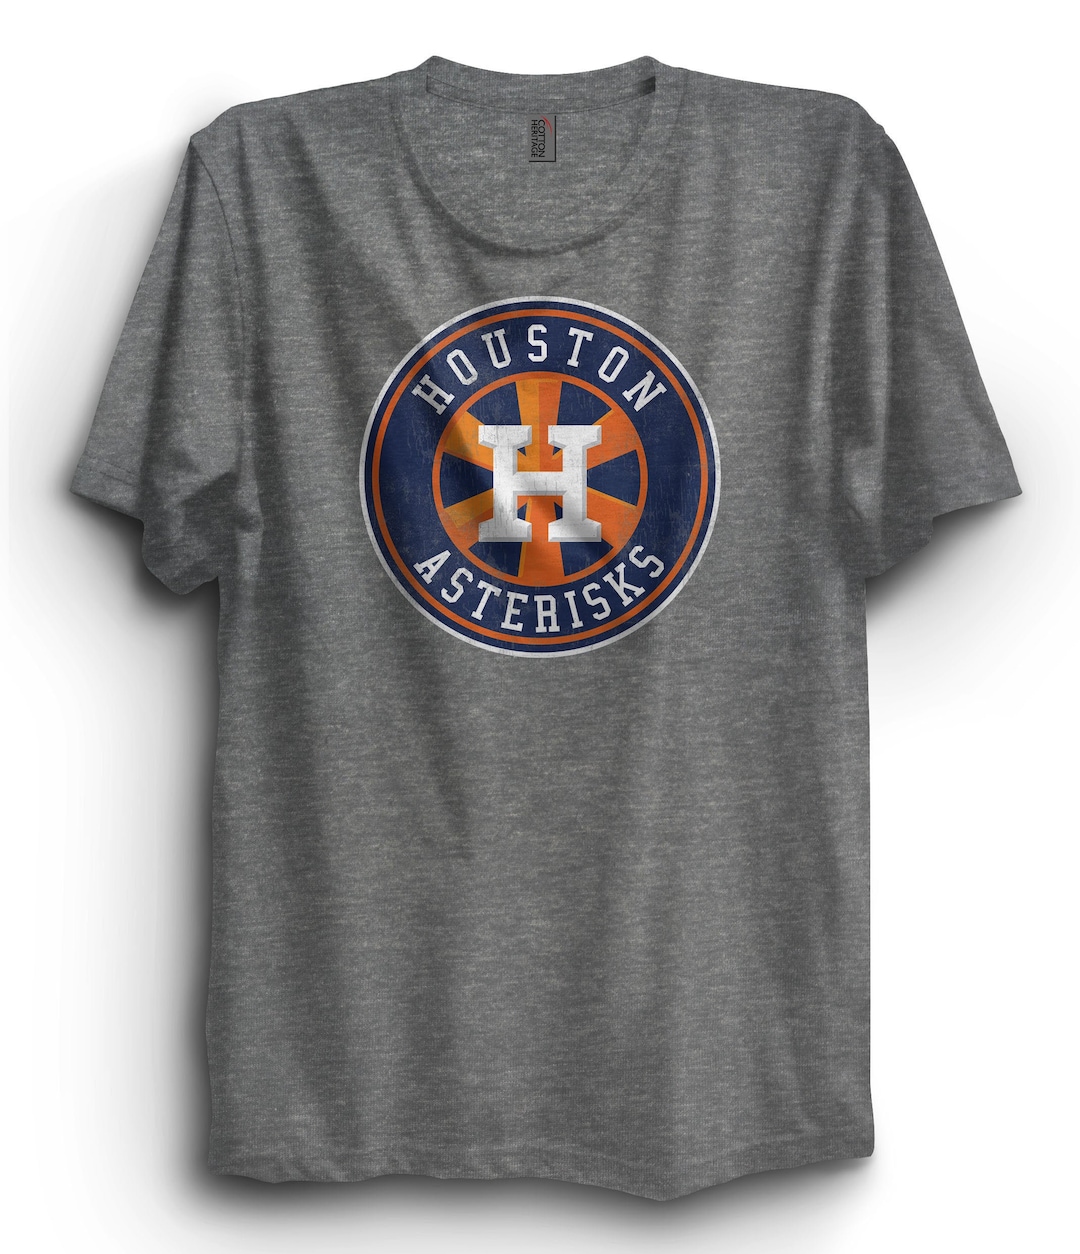 Houston Asterisks Astros Baseball T-shirt Cheat Cheater 